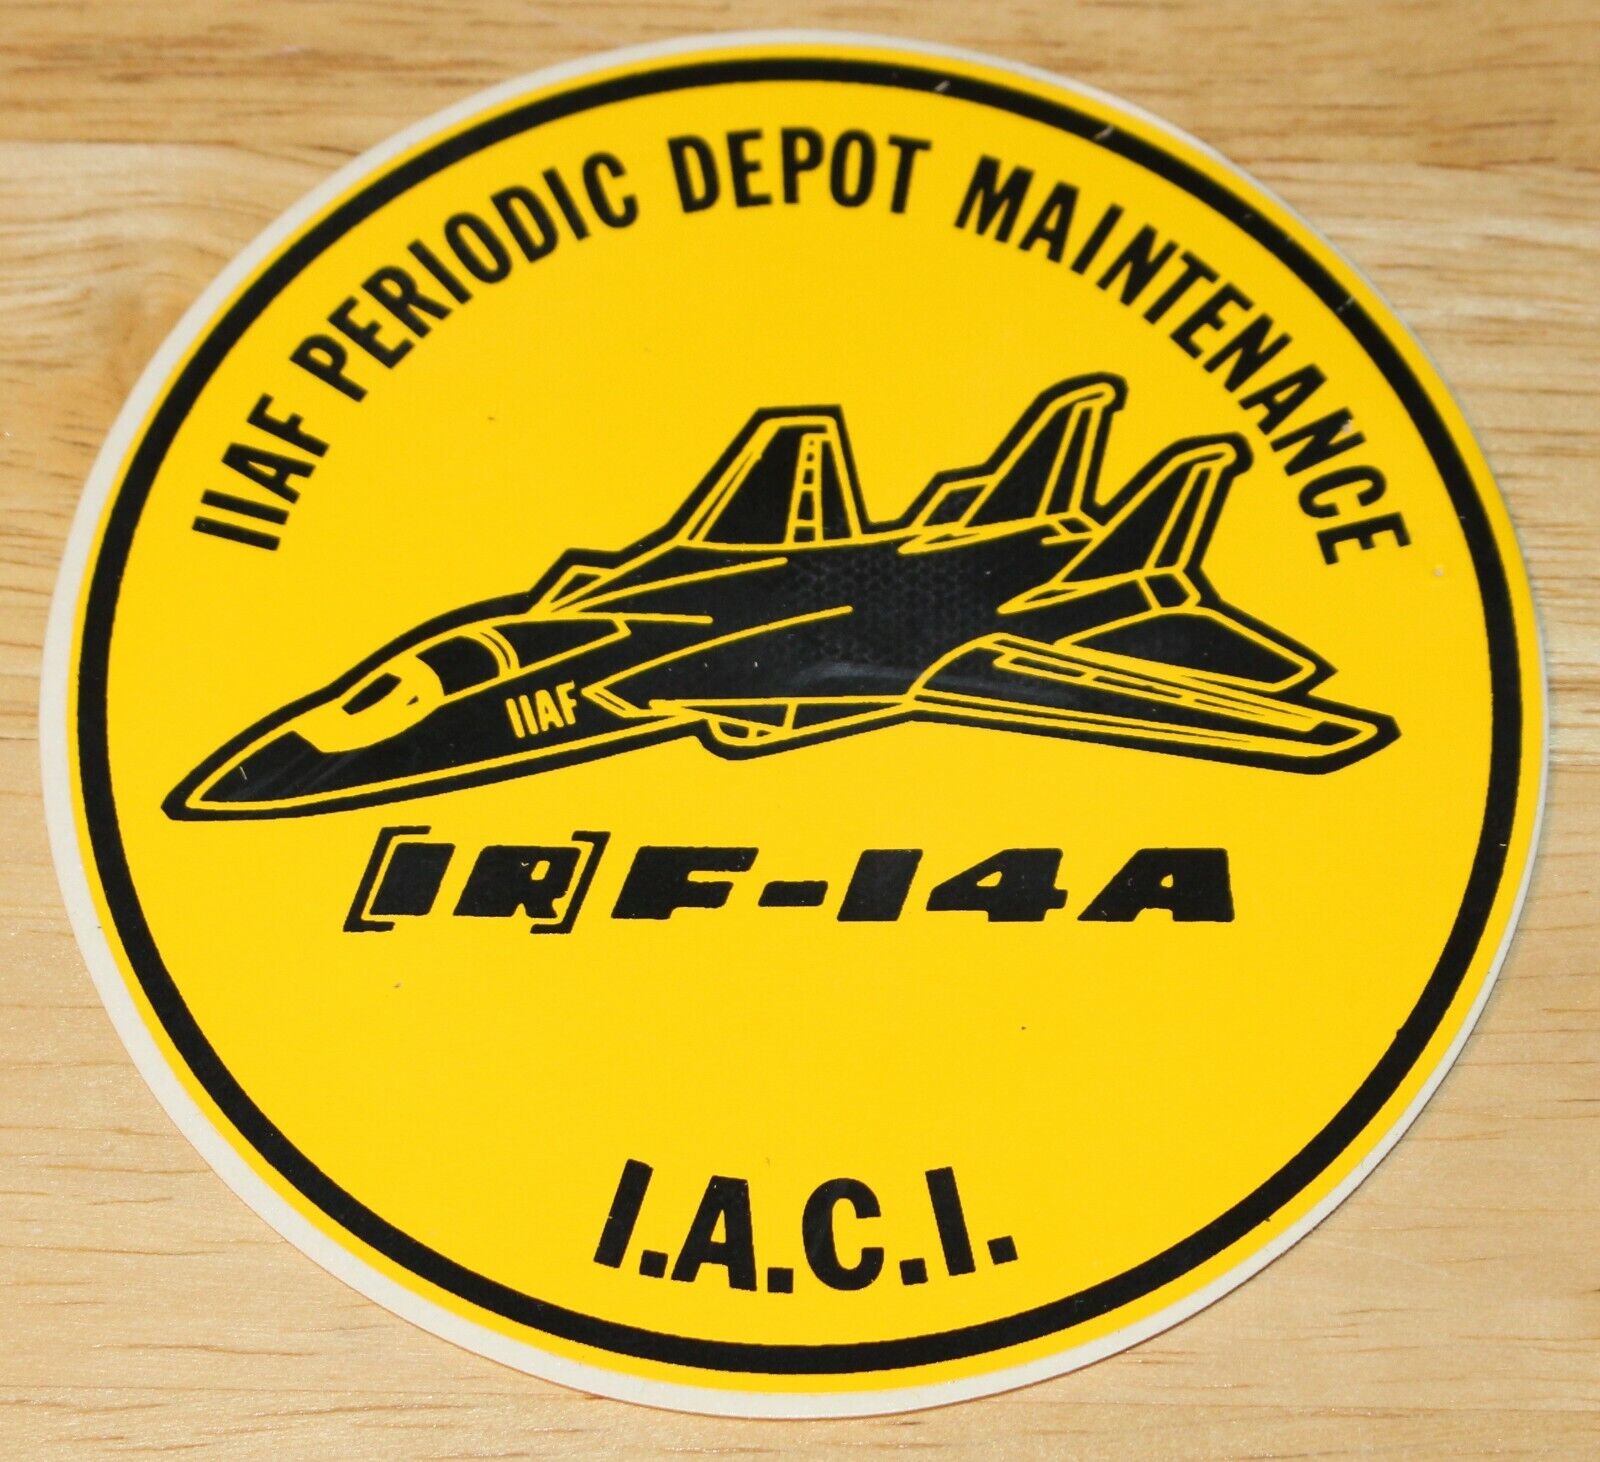 IIAF Imperial Iranian Air Force Grumman F-14A Tomcat Depot Maintenance Sticker